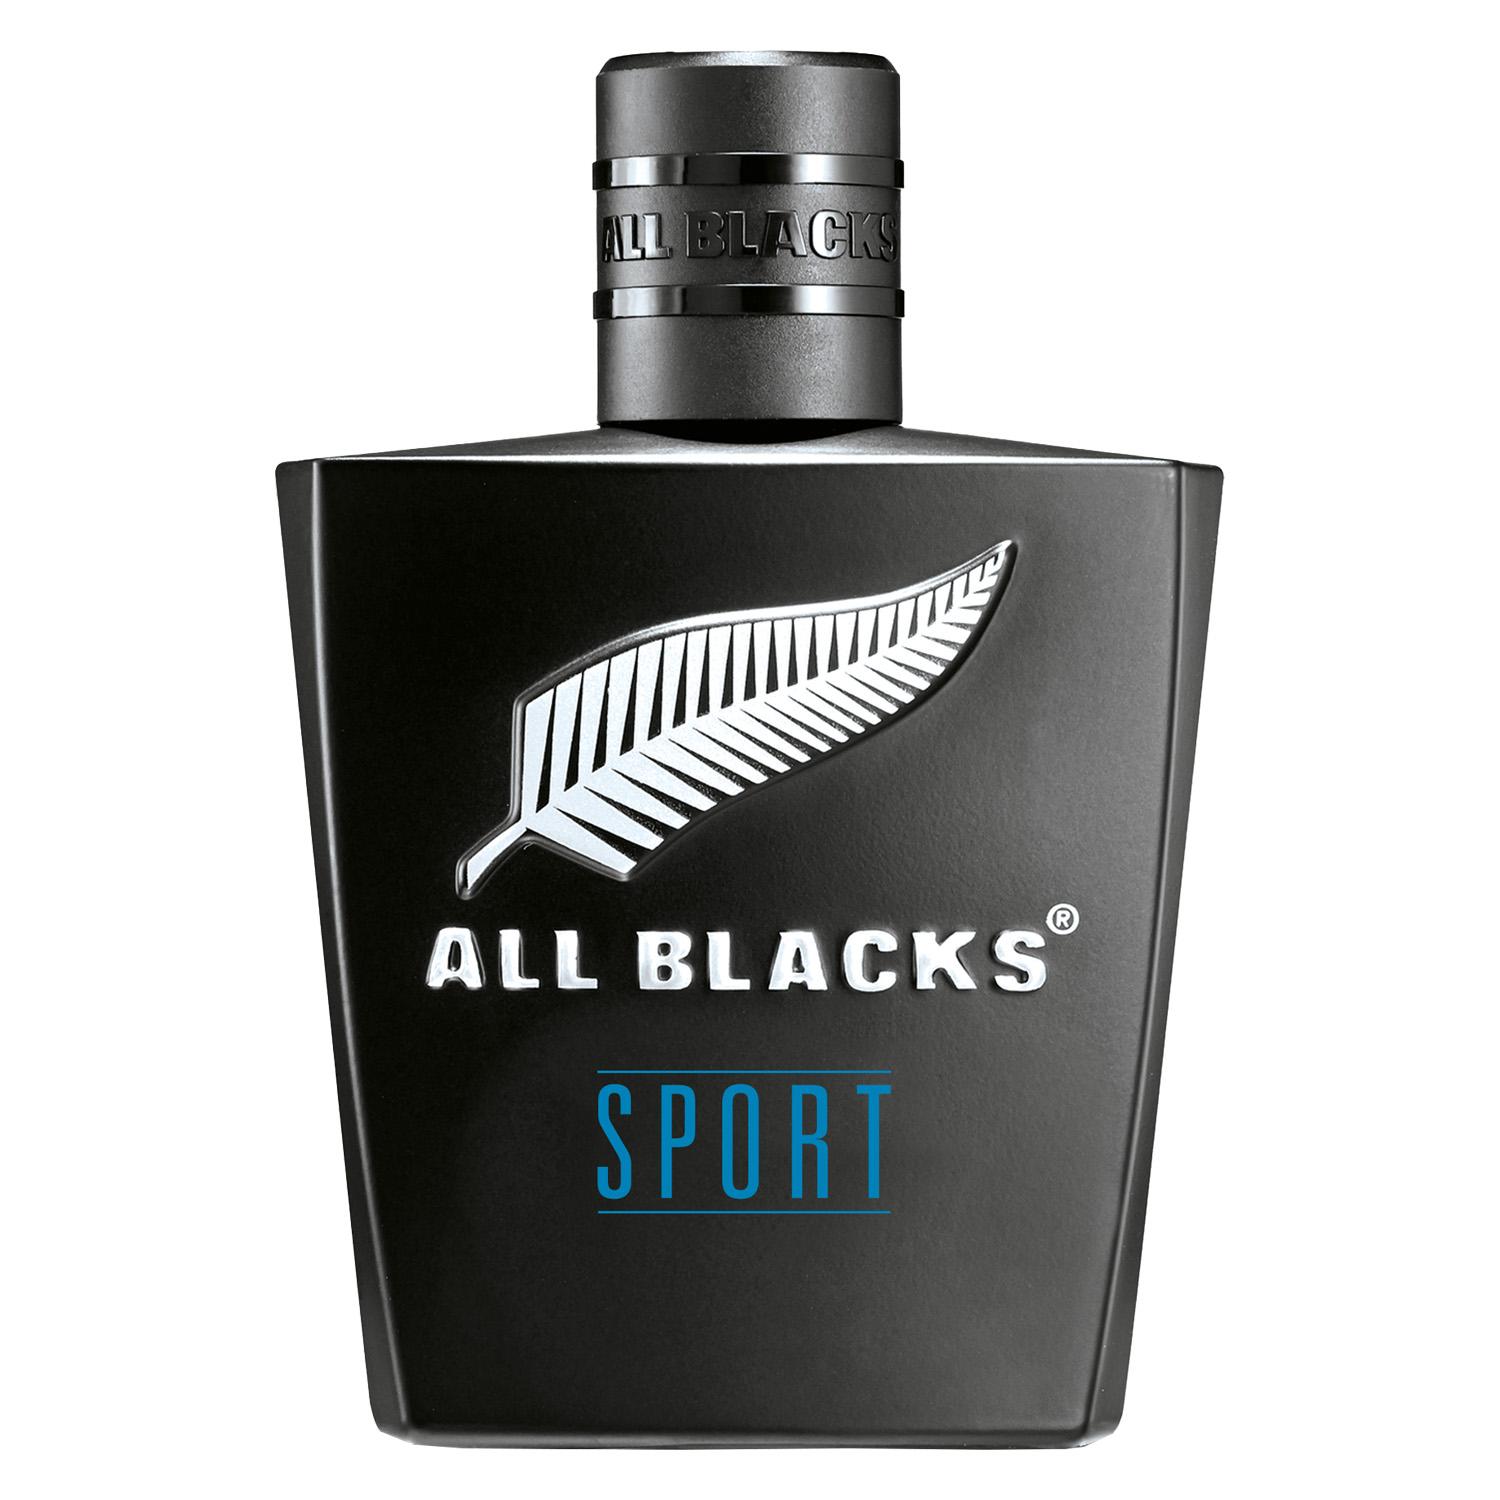 All Blacks Fragrance - Sport Eau de Toilette